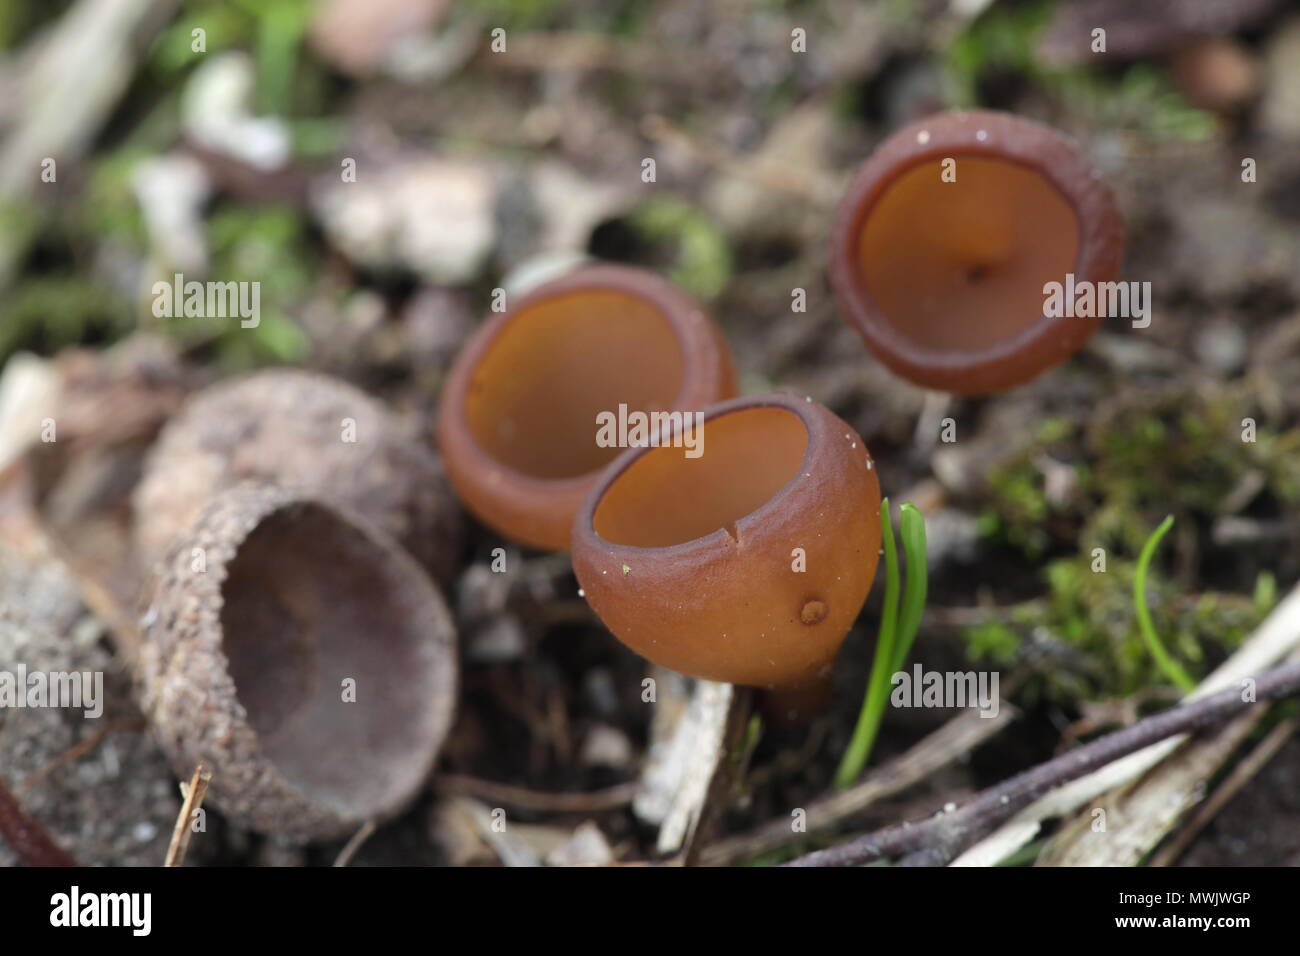 Anemone cup, Dumontinia tuberosa, wild mushroom from Finland Stock Photo